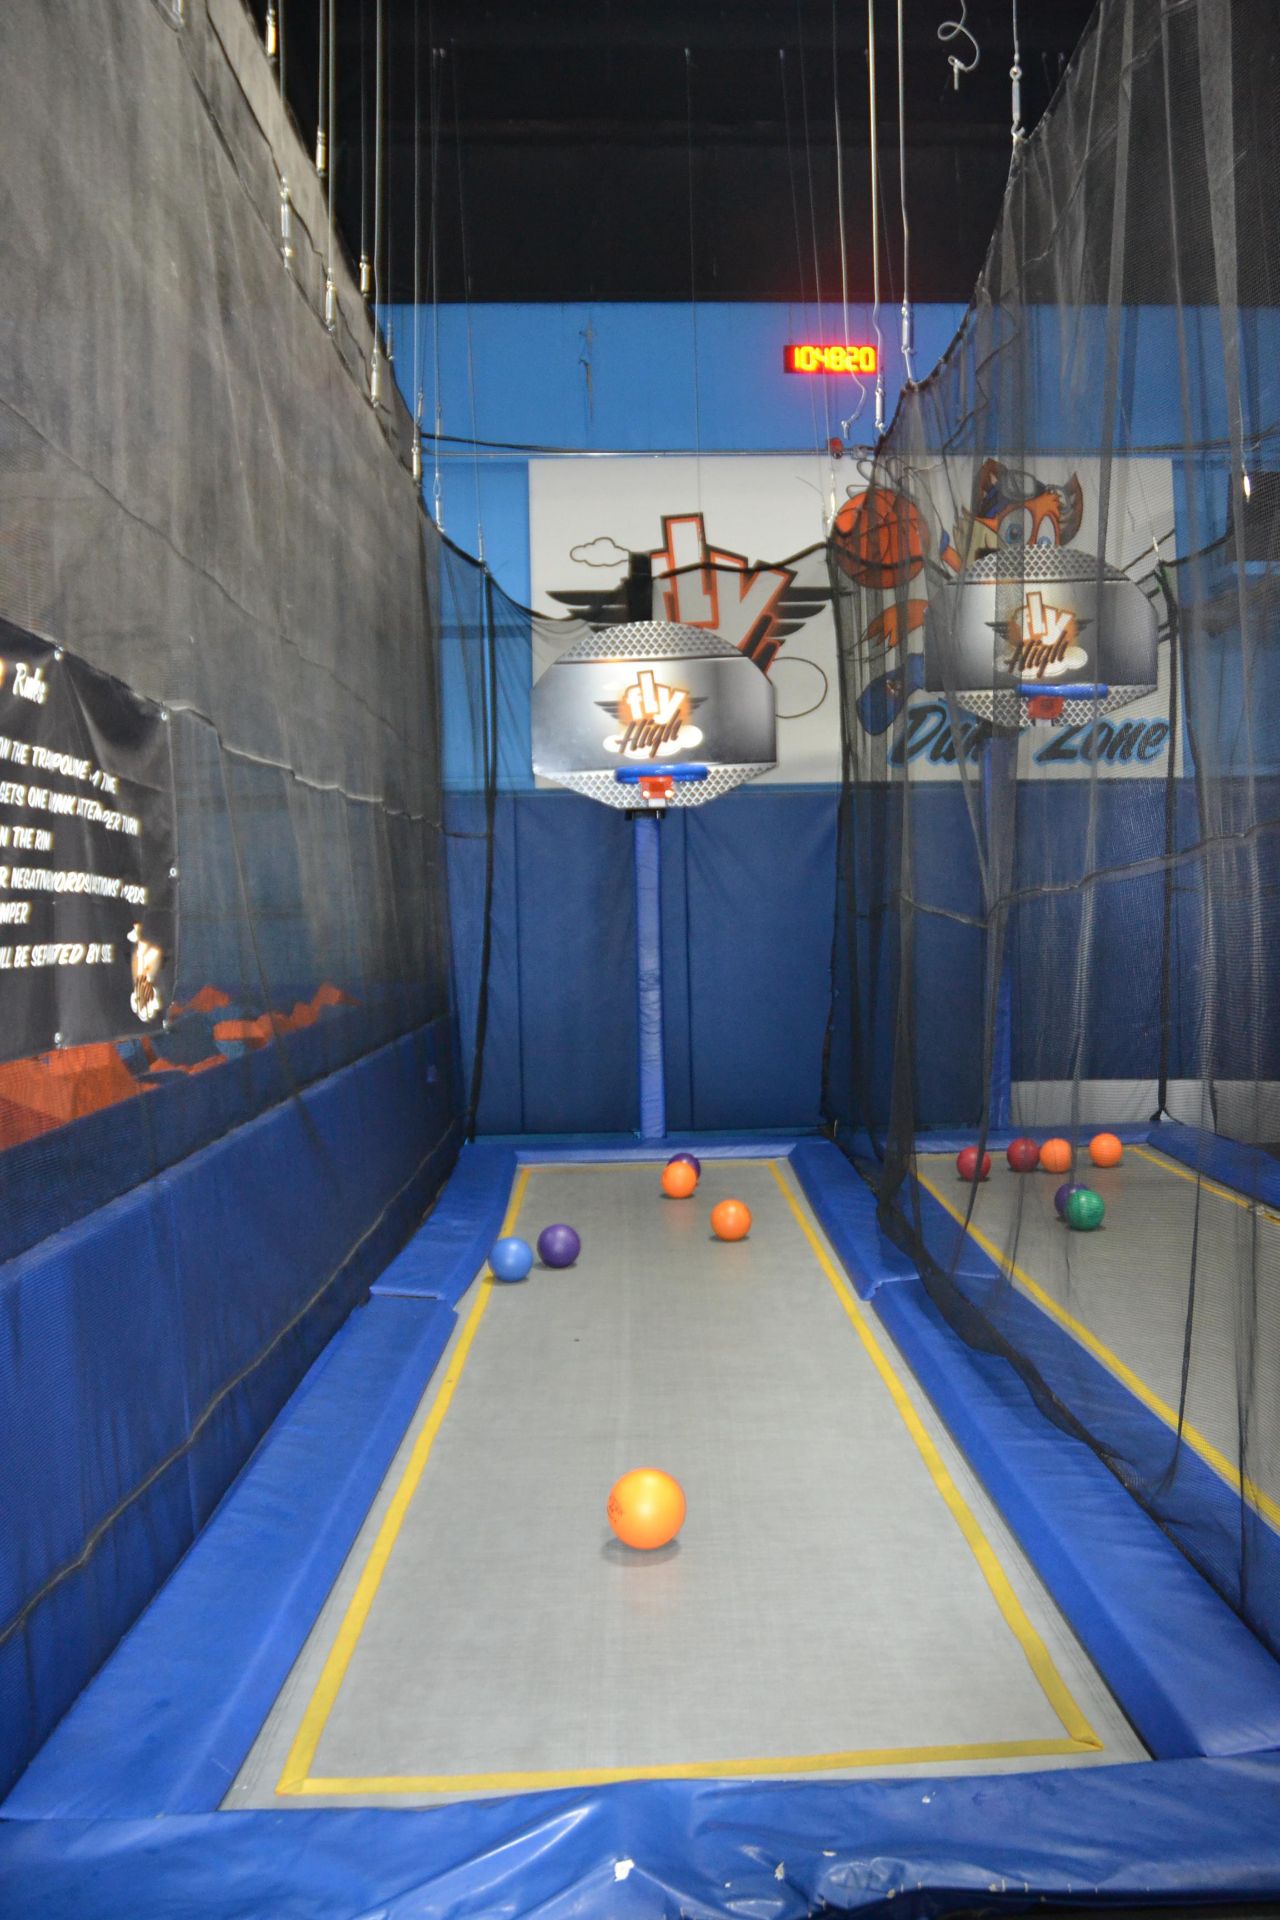 Trampoline Basketball Area Including: (1) 23' x 6' Trampoline, (1) Basketball Hoop w/ Balls, Netting